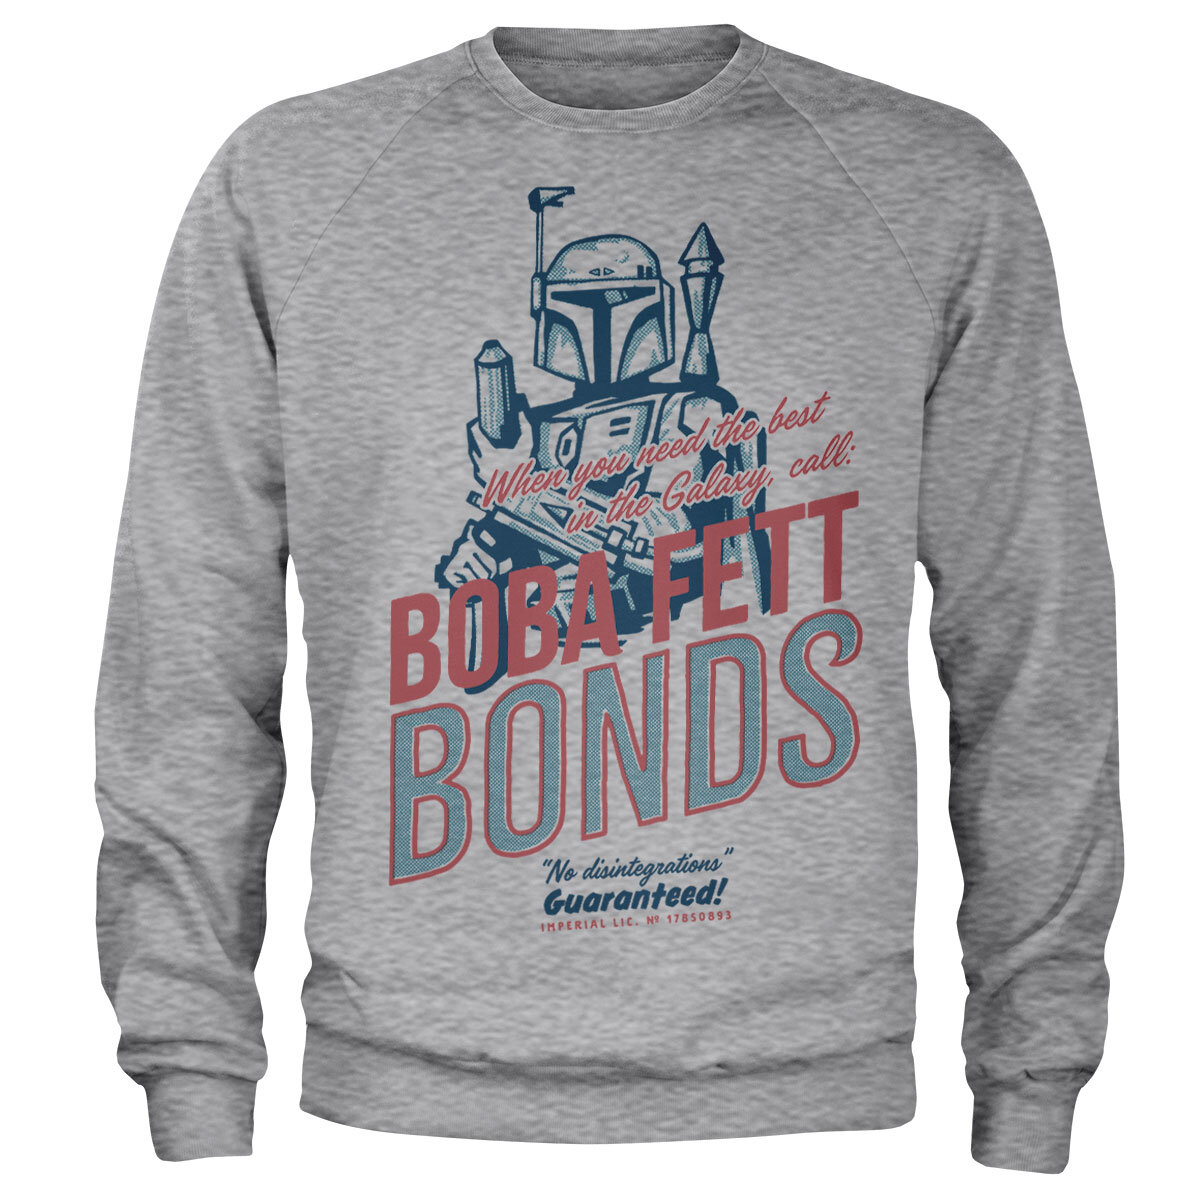 Boba Fett Bonds Sweatshirt